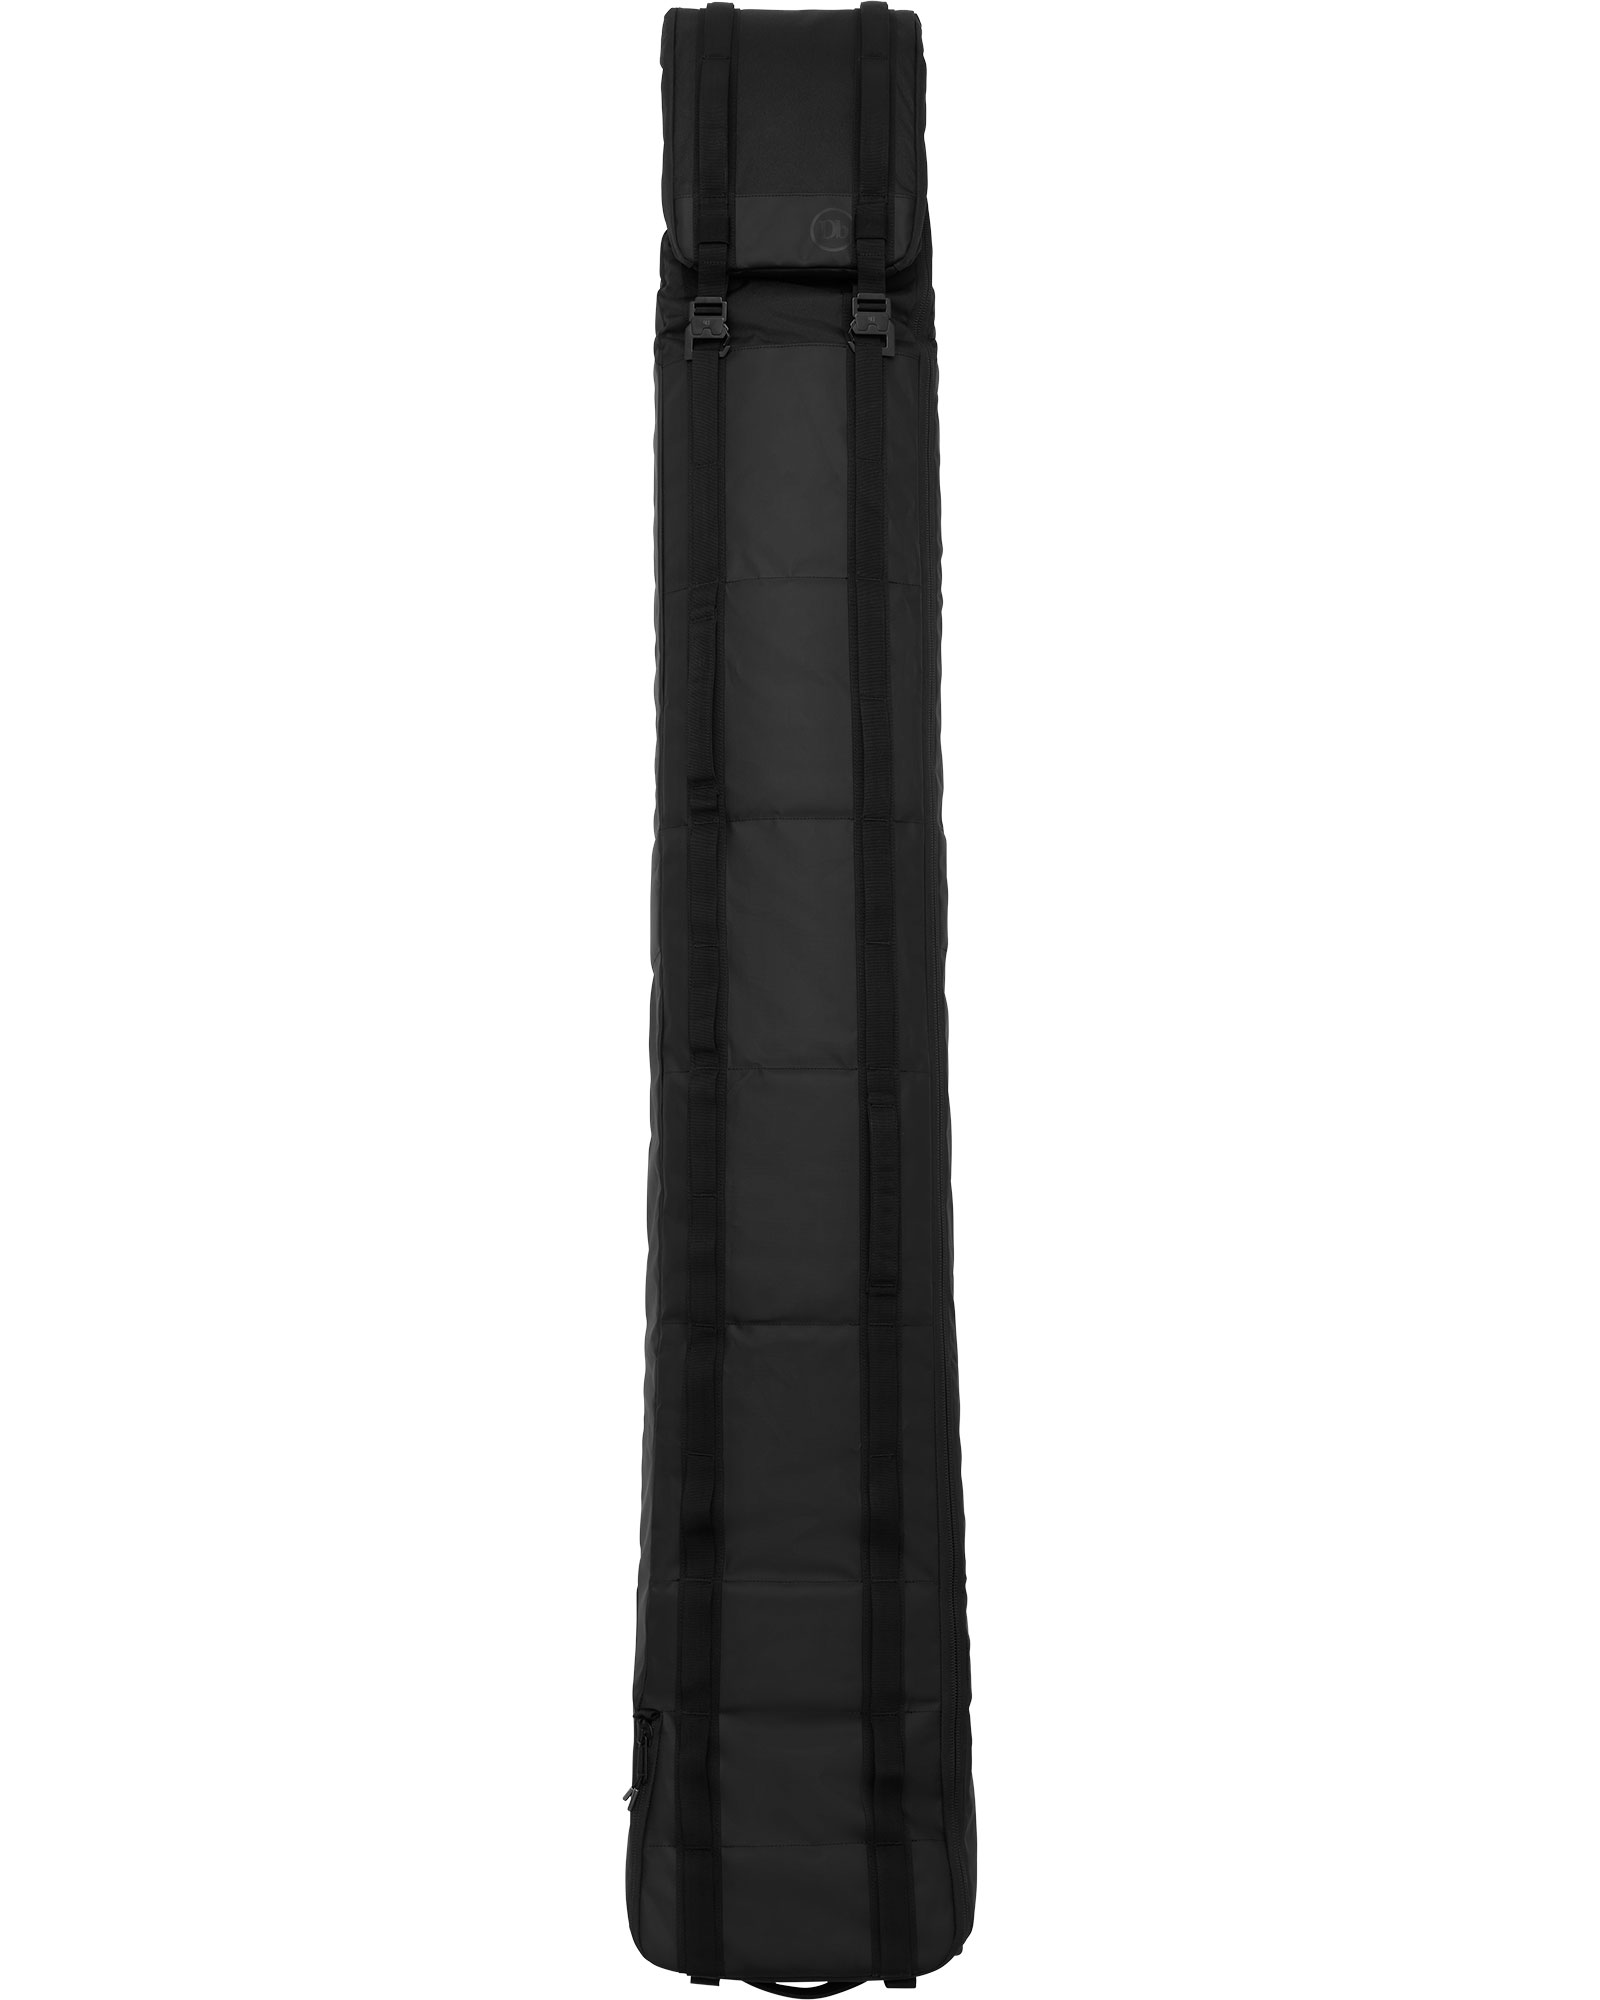 Db The Djarv Light Snow Roller - Black Out 220cm